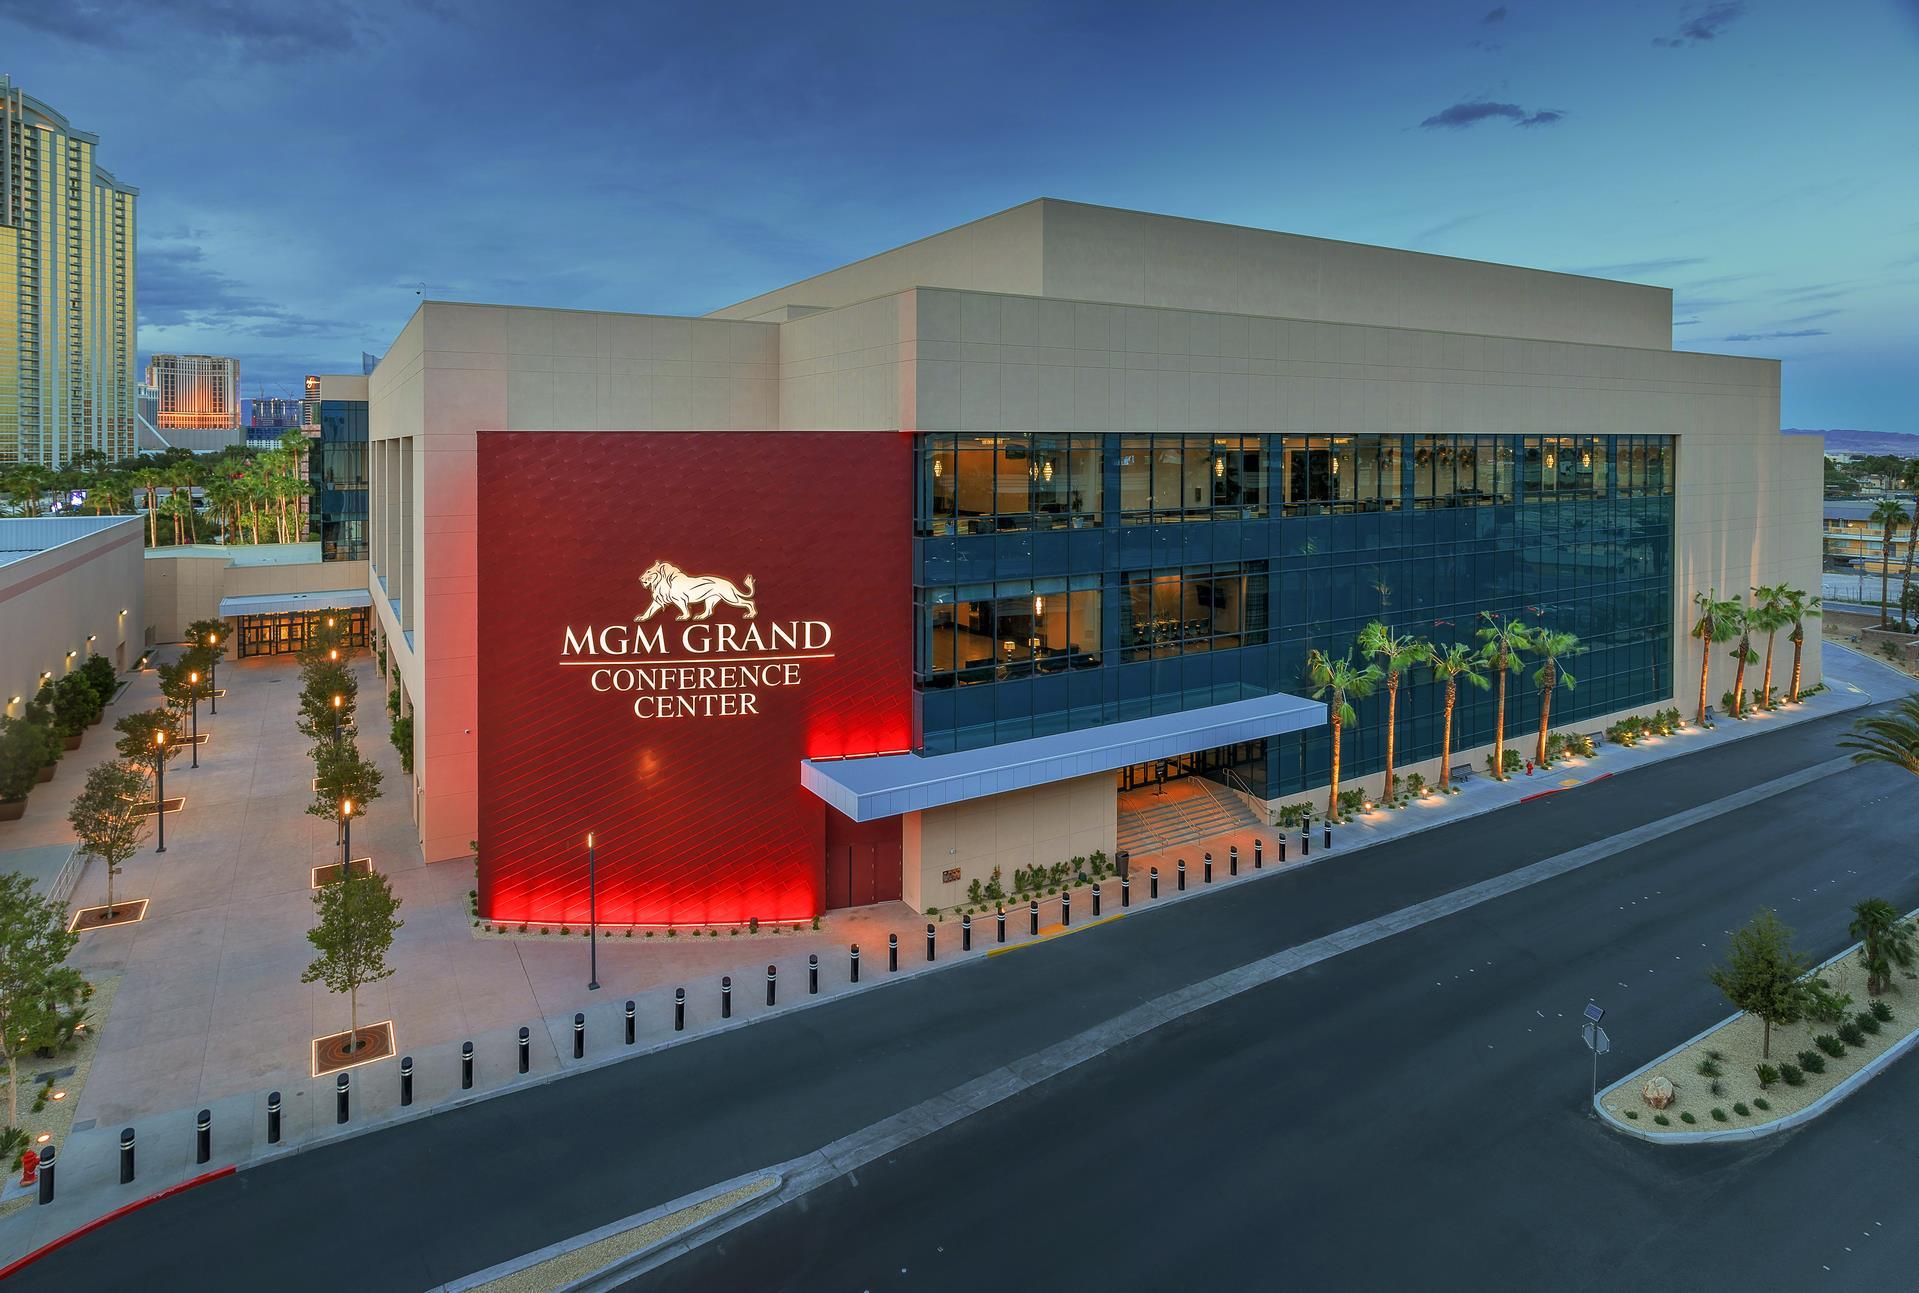 MGM Grand Hotel & Casino in Las Vegas, NV